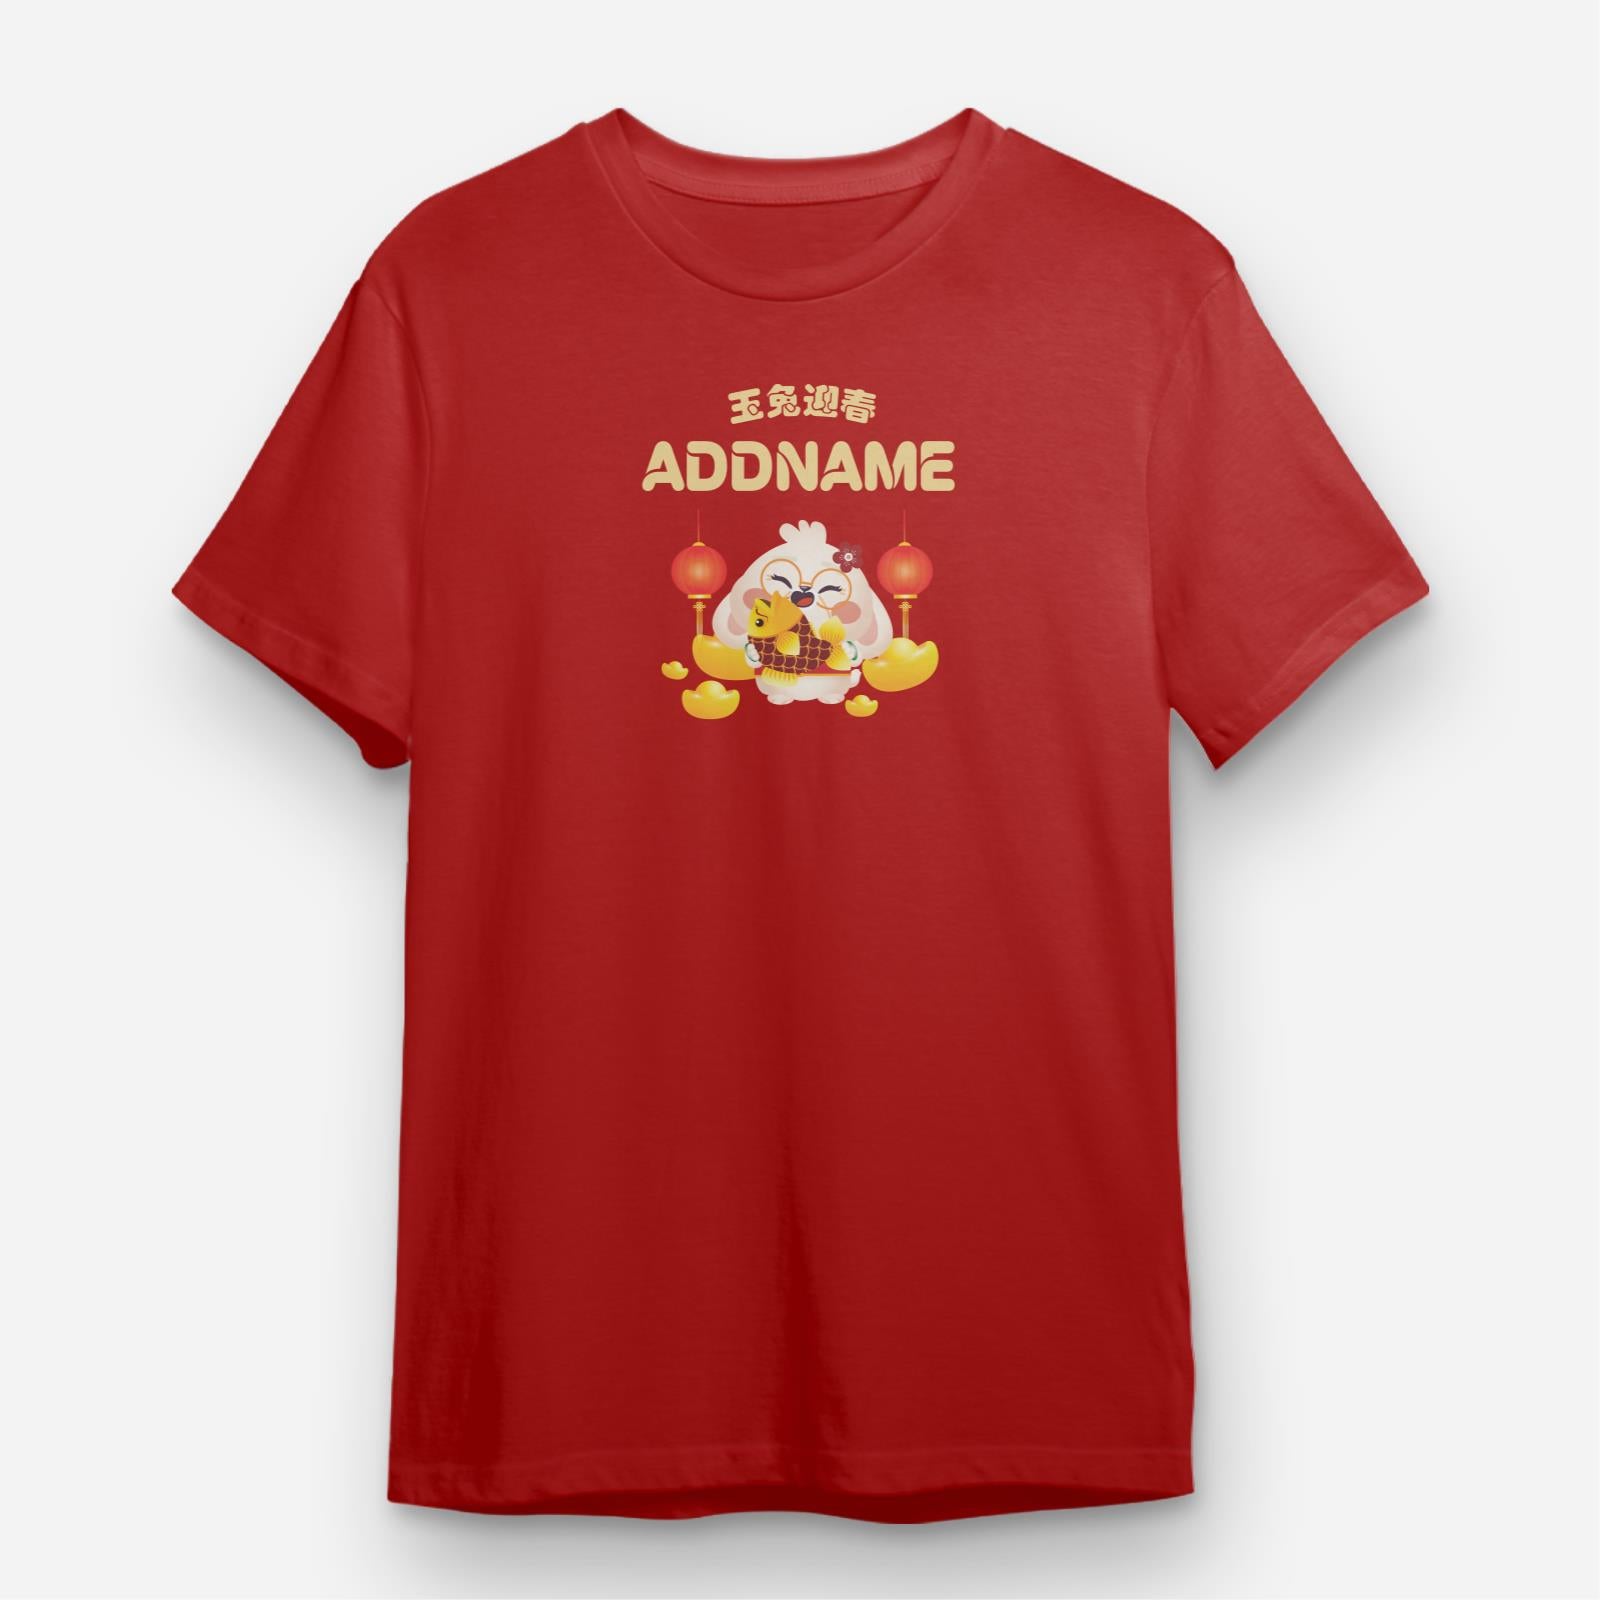 Cny Rabbit Family - Grandma Rabbit Unisex Tee Shirt with English Personalization